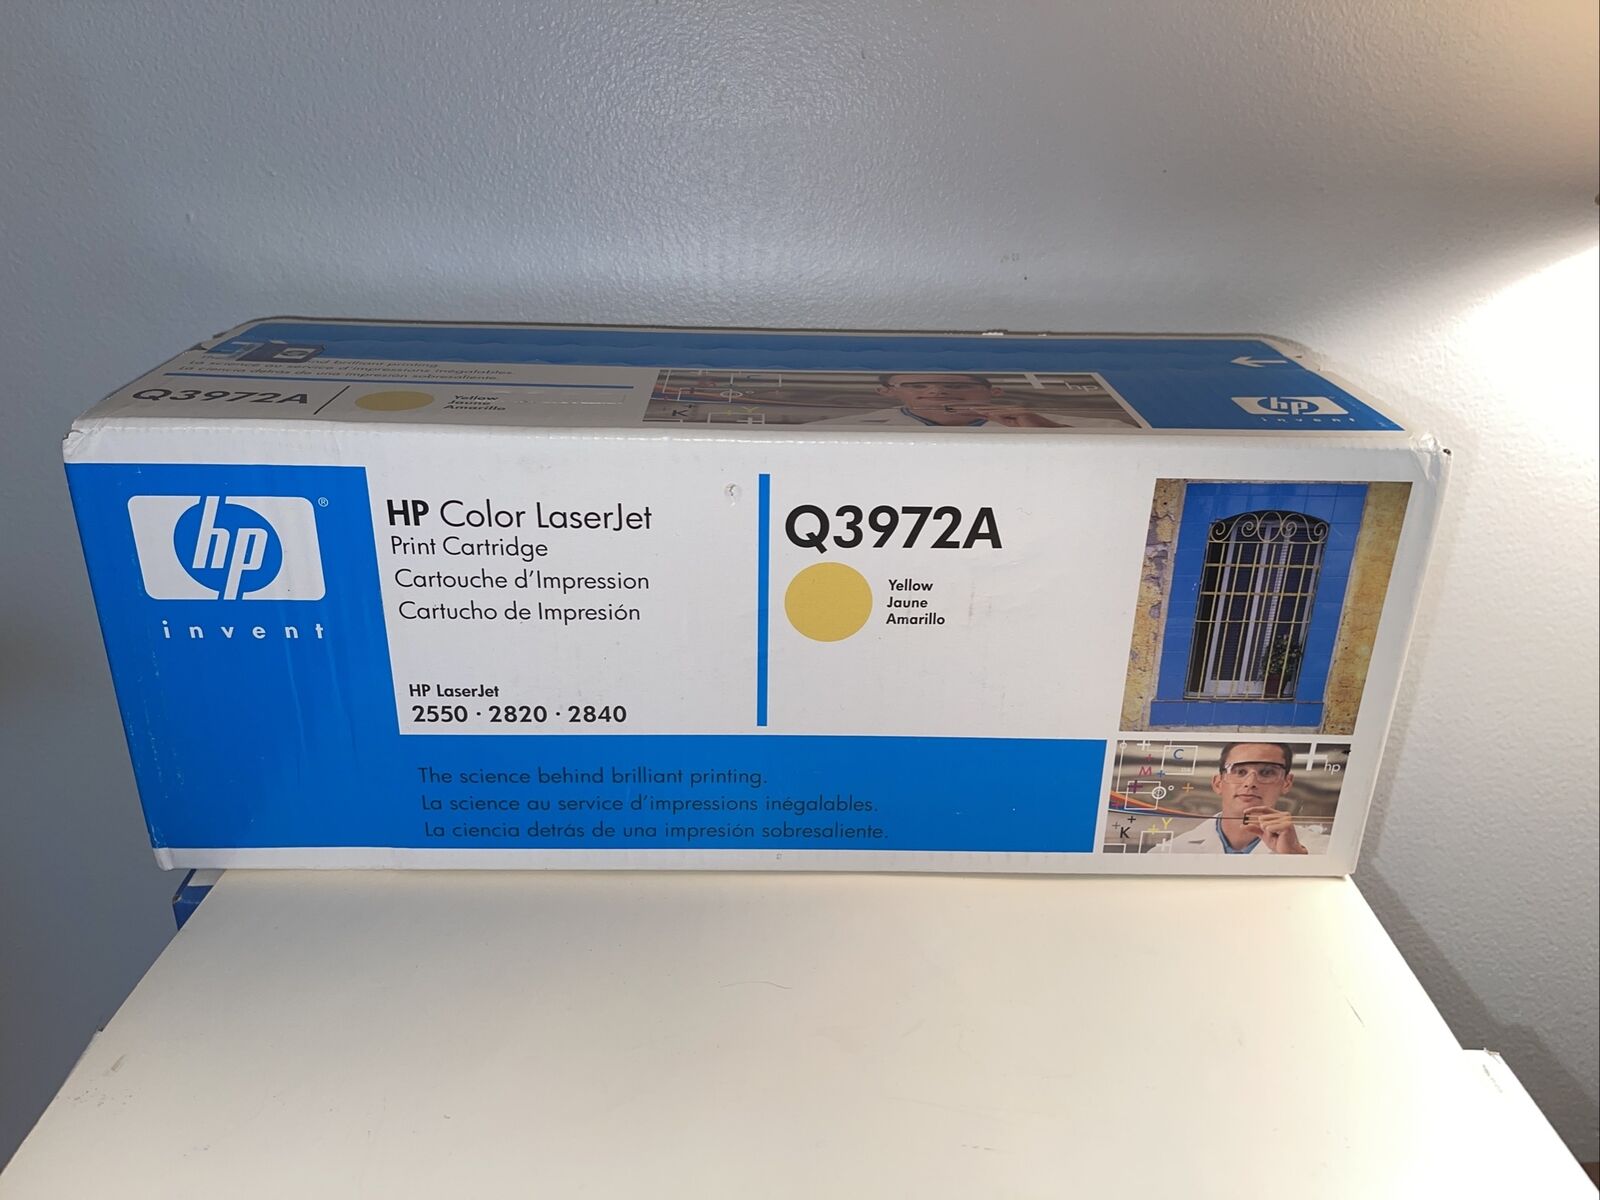 HP Color Laserjet Print Cartridge Q3972A Yellow  New     BSA